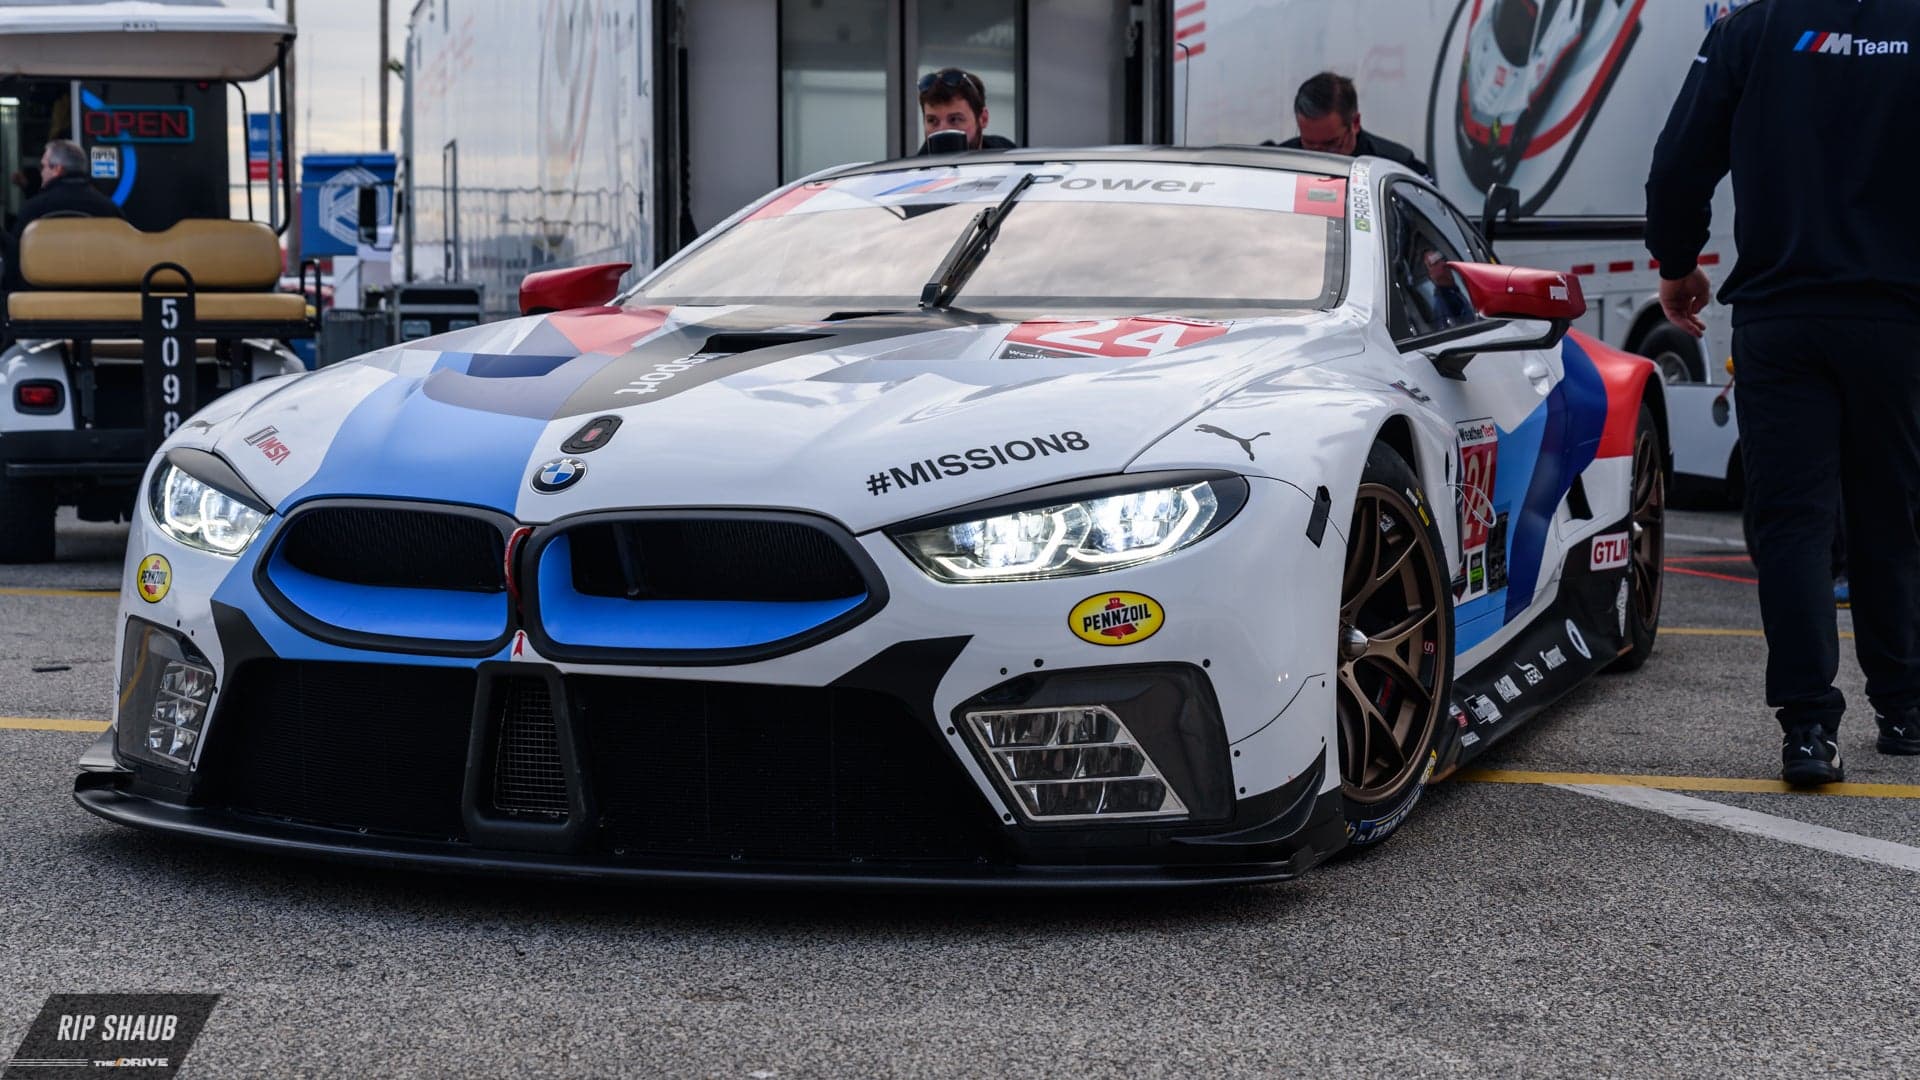 BMW Reveals M8 GTE Livery Ahead of Rolex 24 at Daytona